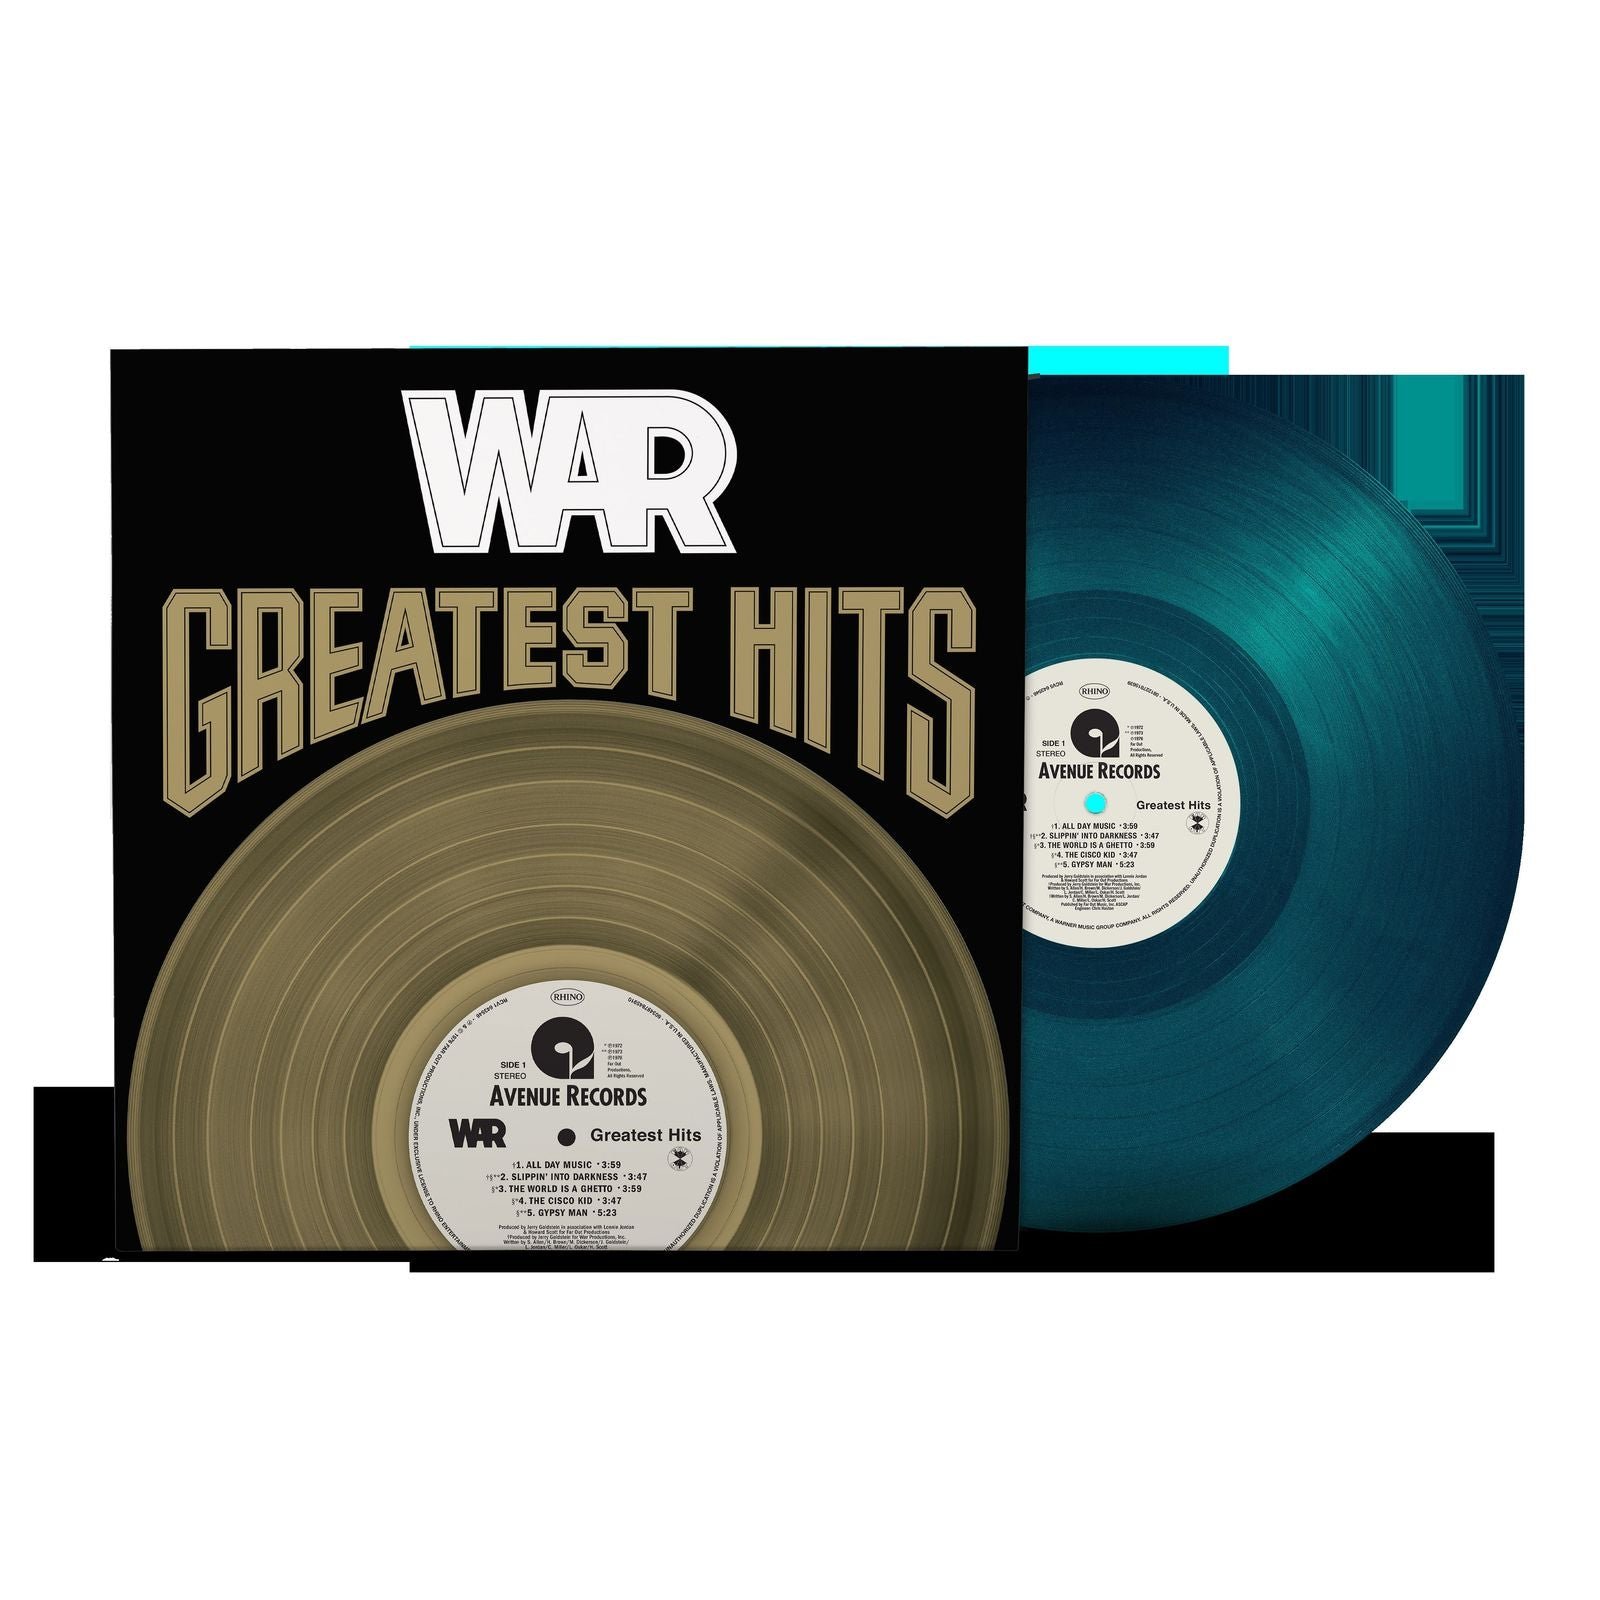 CD Shop - WAR GREATEST HITS (BLUE VINYL ALBUM. INDIE, BRICKS & MORTAR EXCLUSIVE)